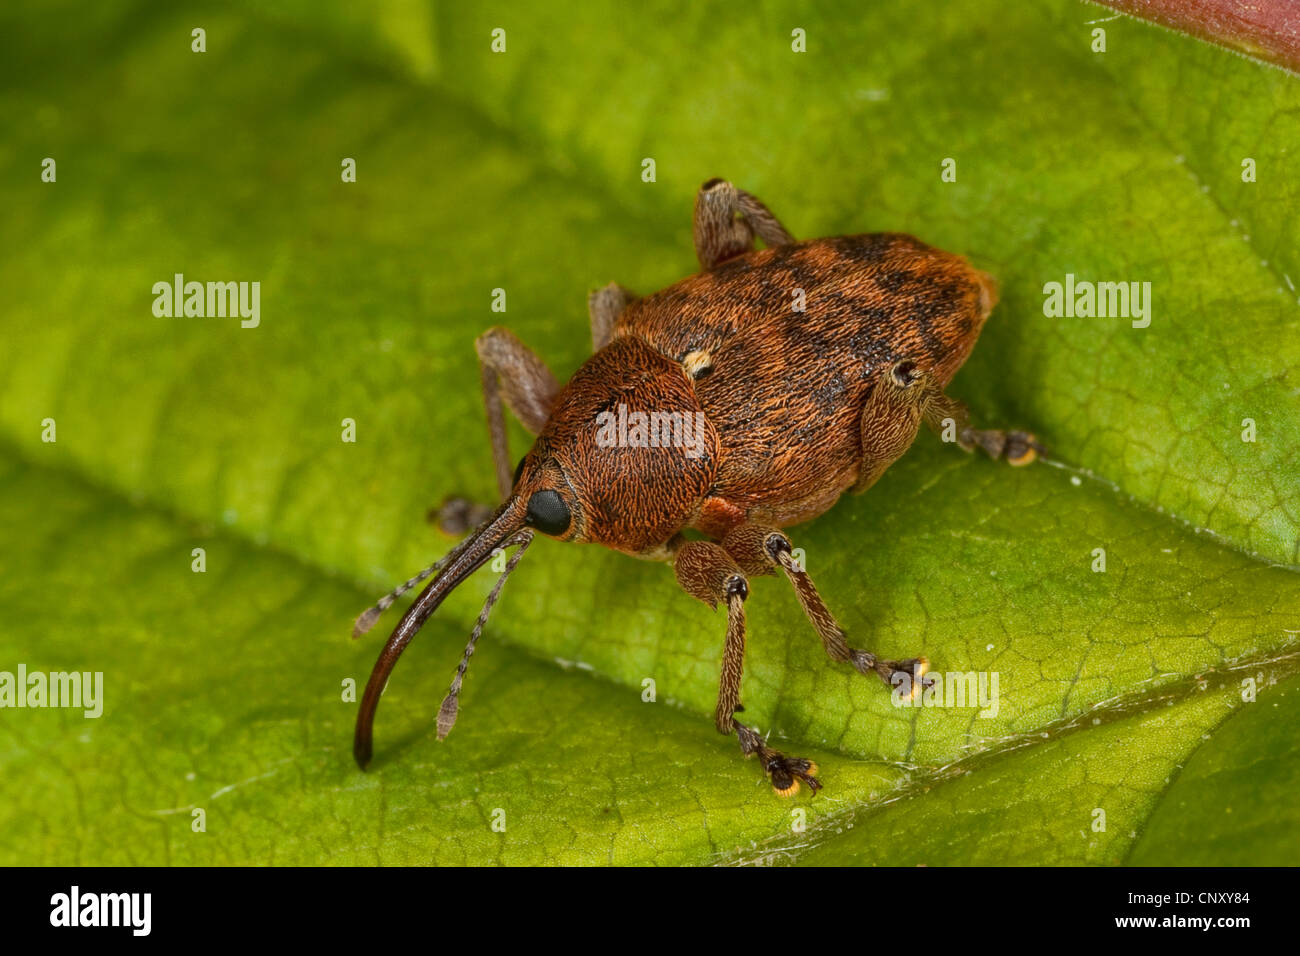 Nut weevil, Hazelnut weevil (Curculio nucum, Balaninus nucum), sitting on a leaf, Germany Stock Photo